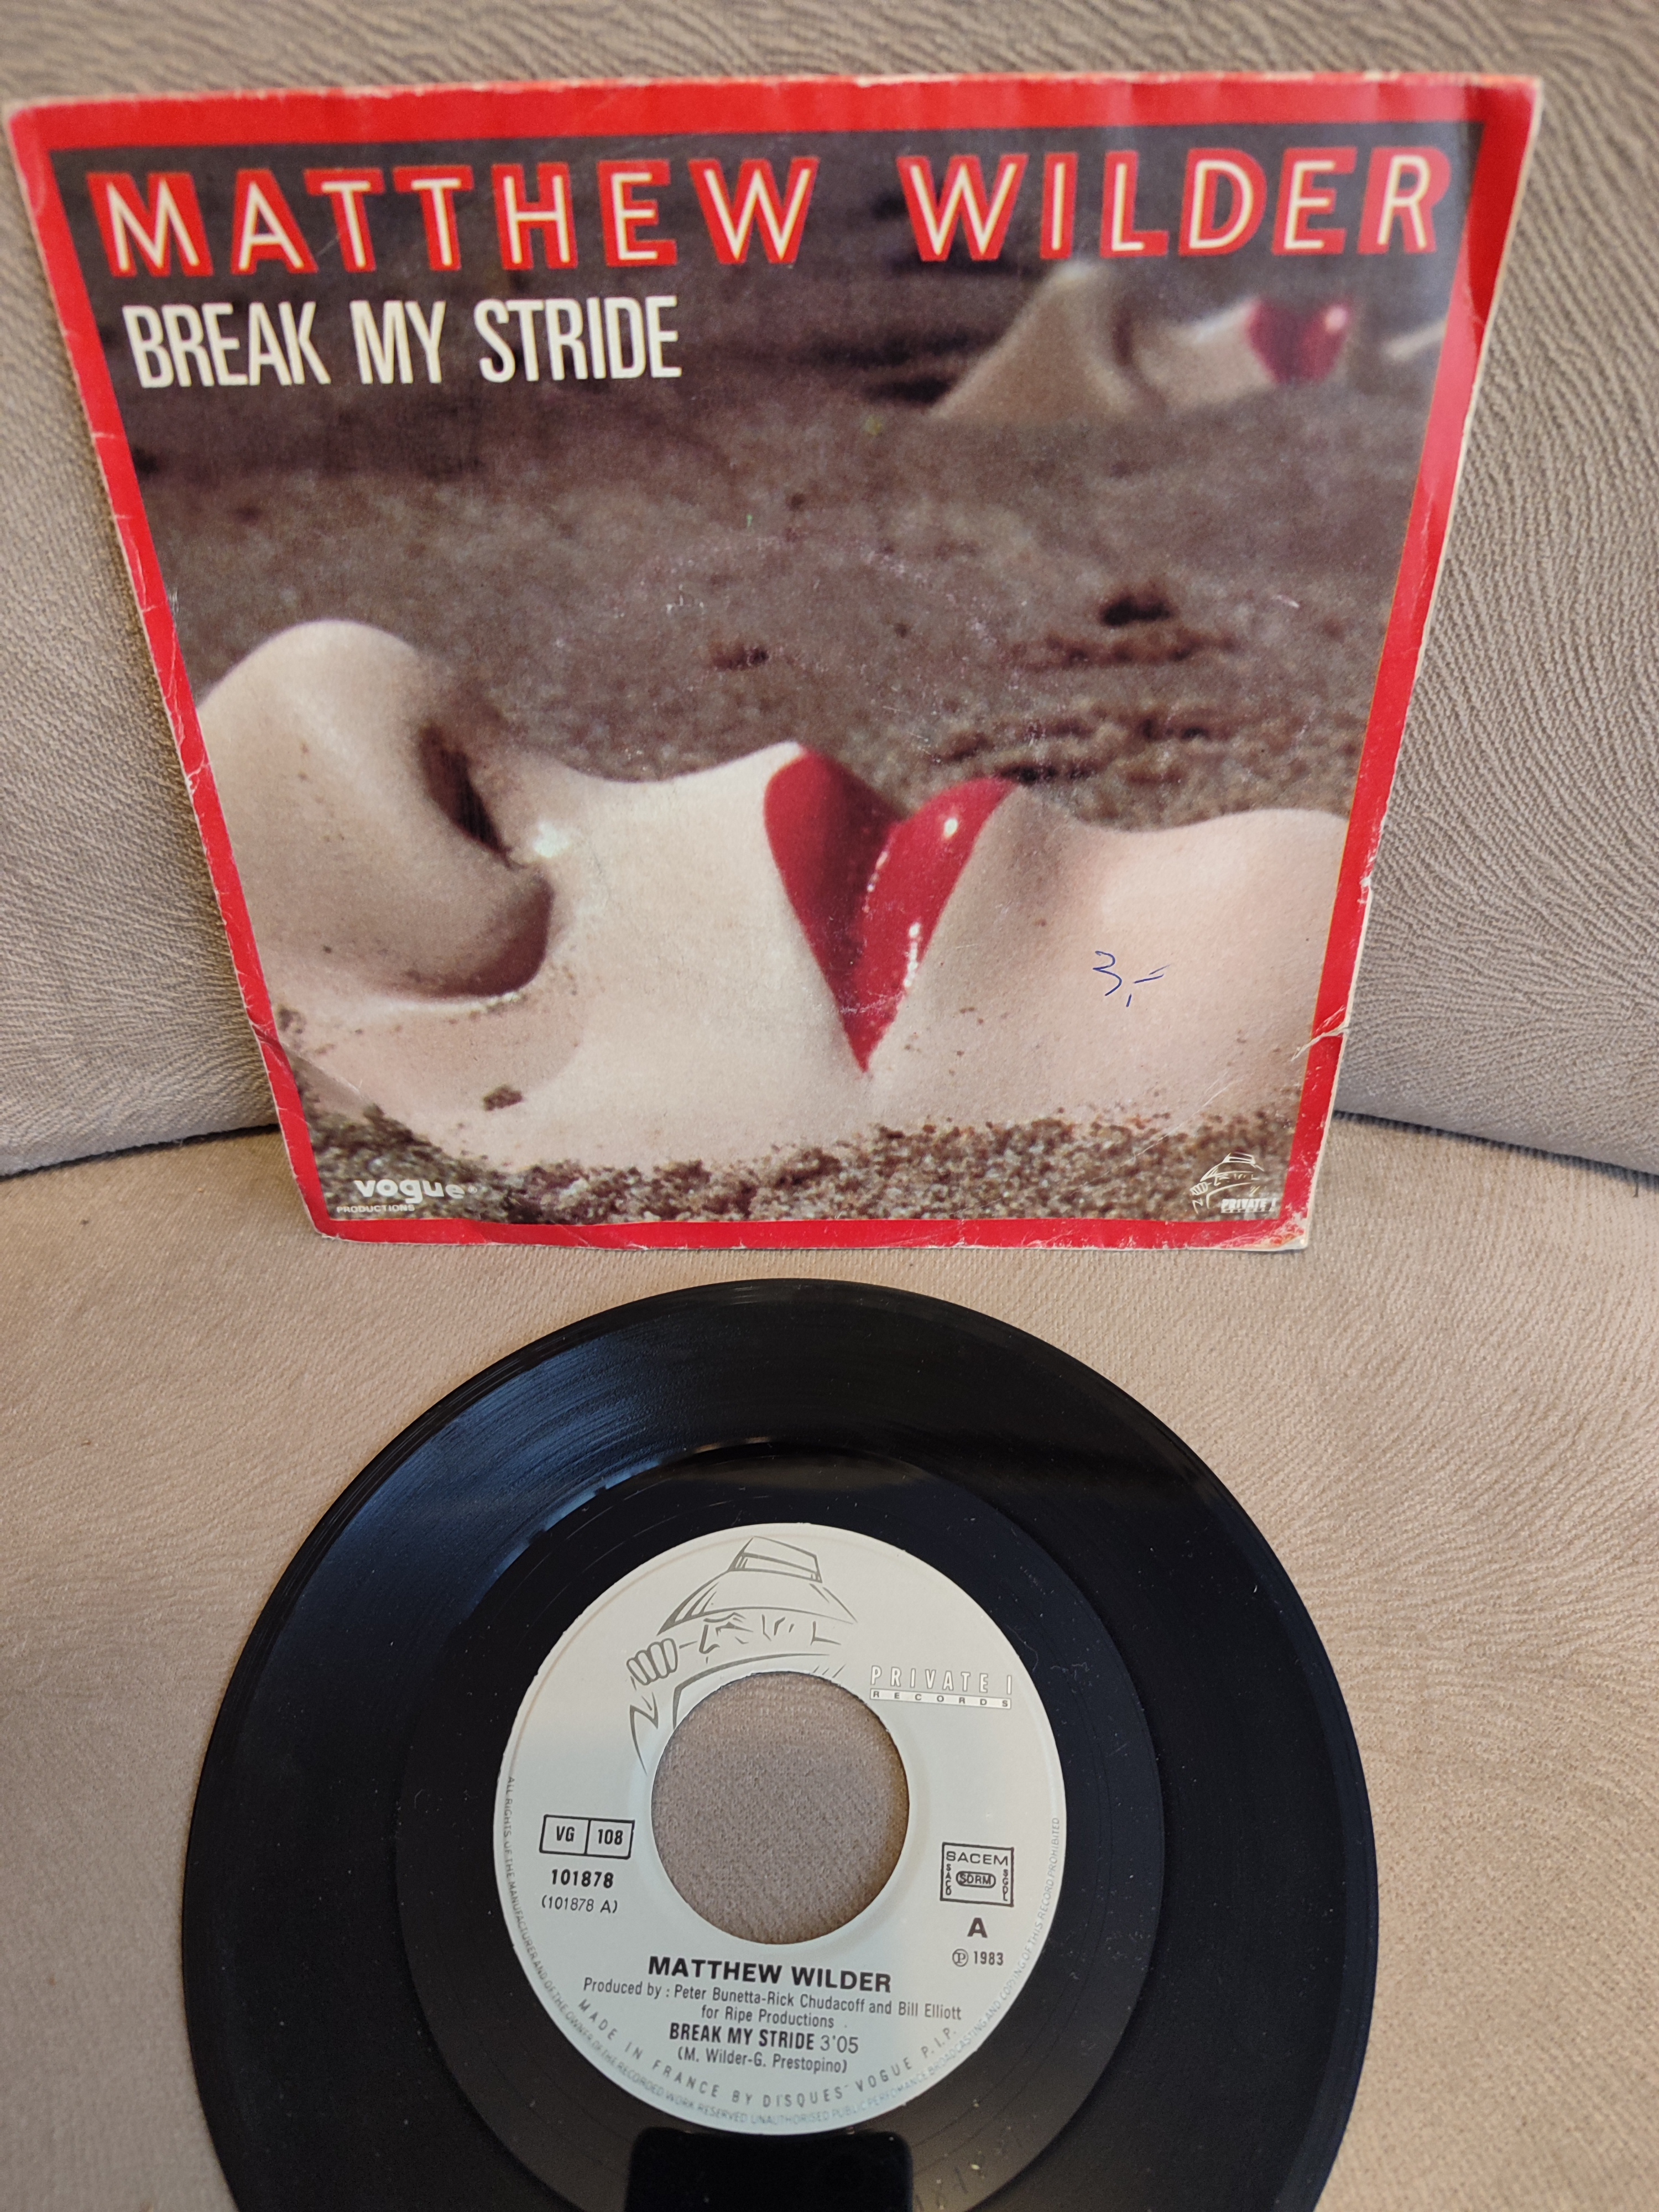 MATTHEW WILDER - Break My Stride - 1983 Fransa  Basım 45 lik Plak 2. el